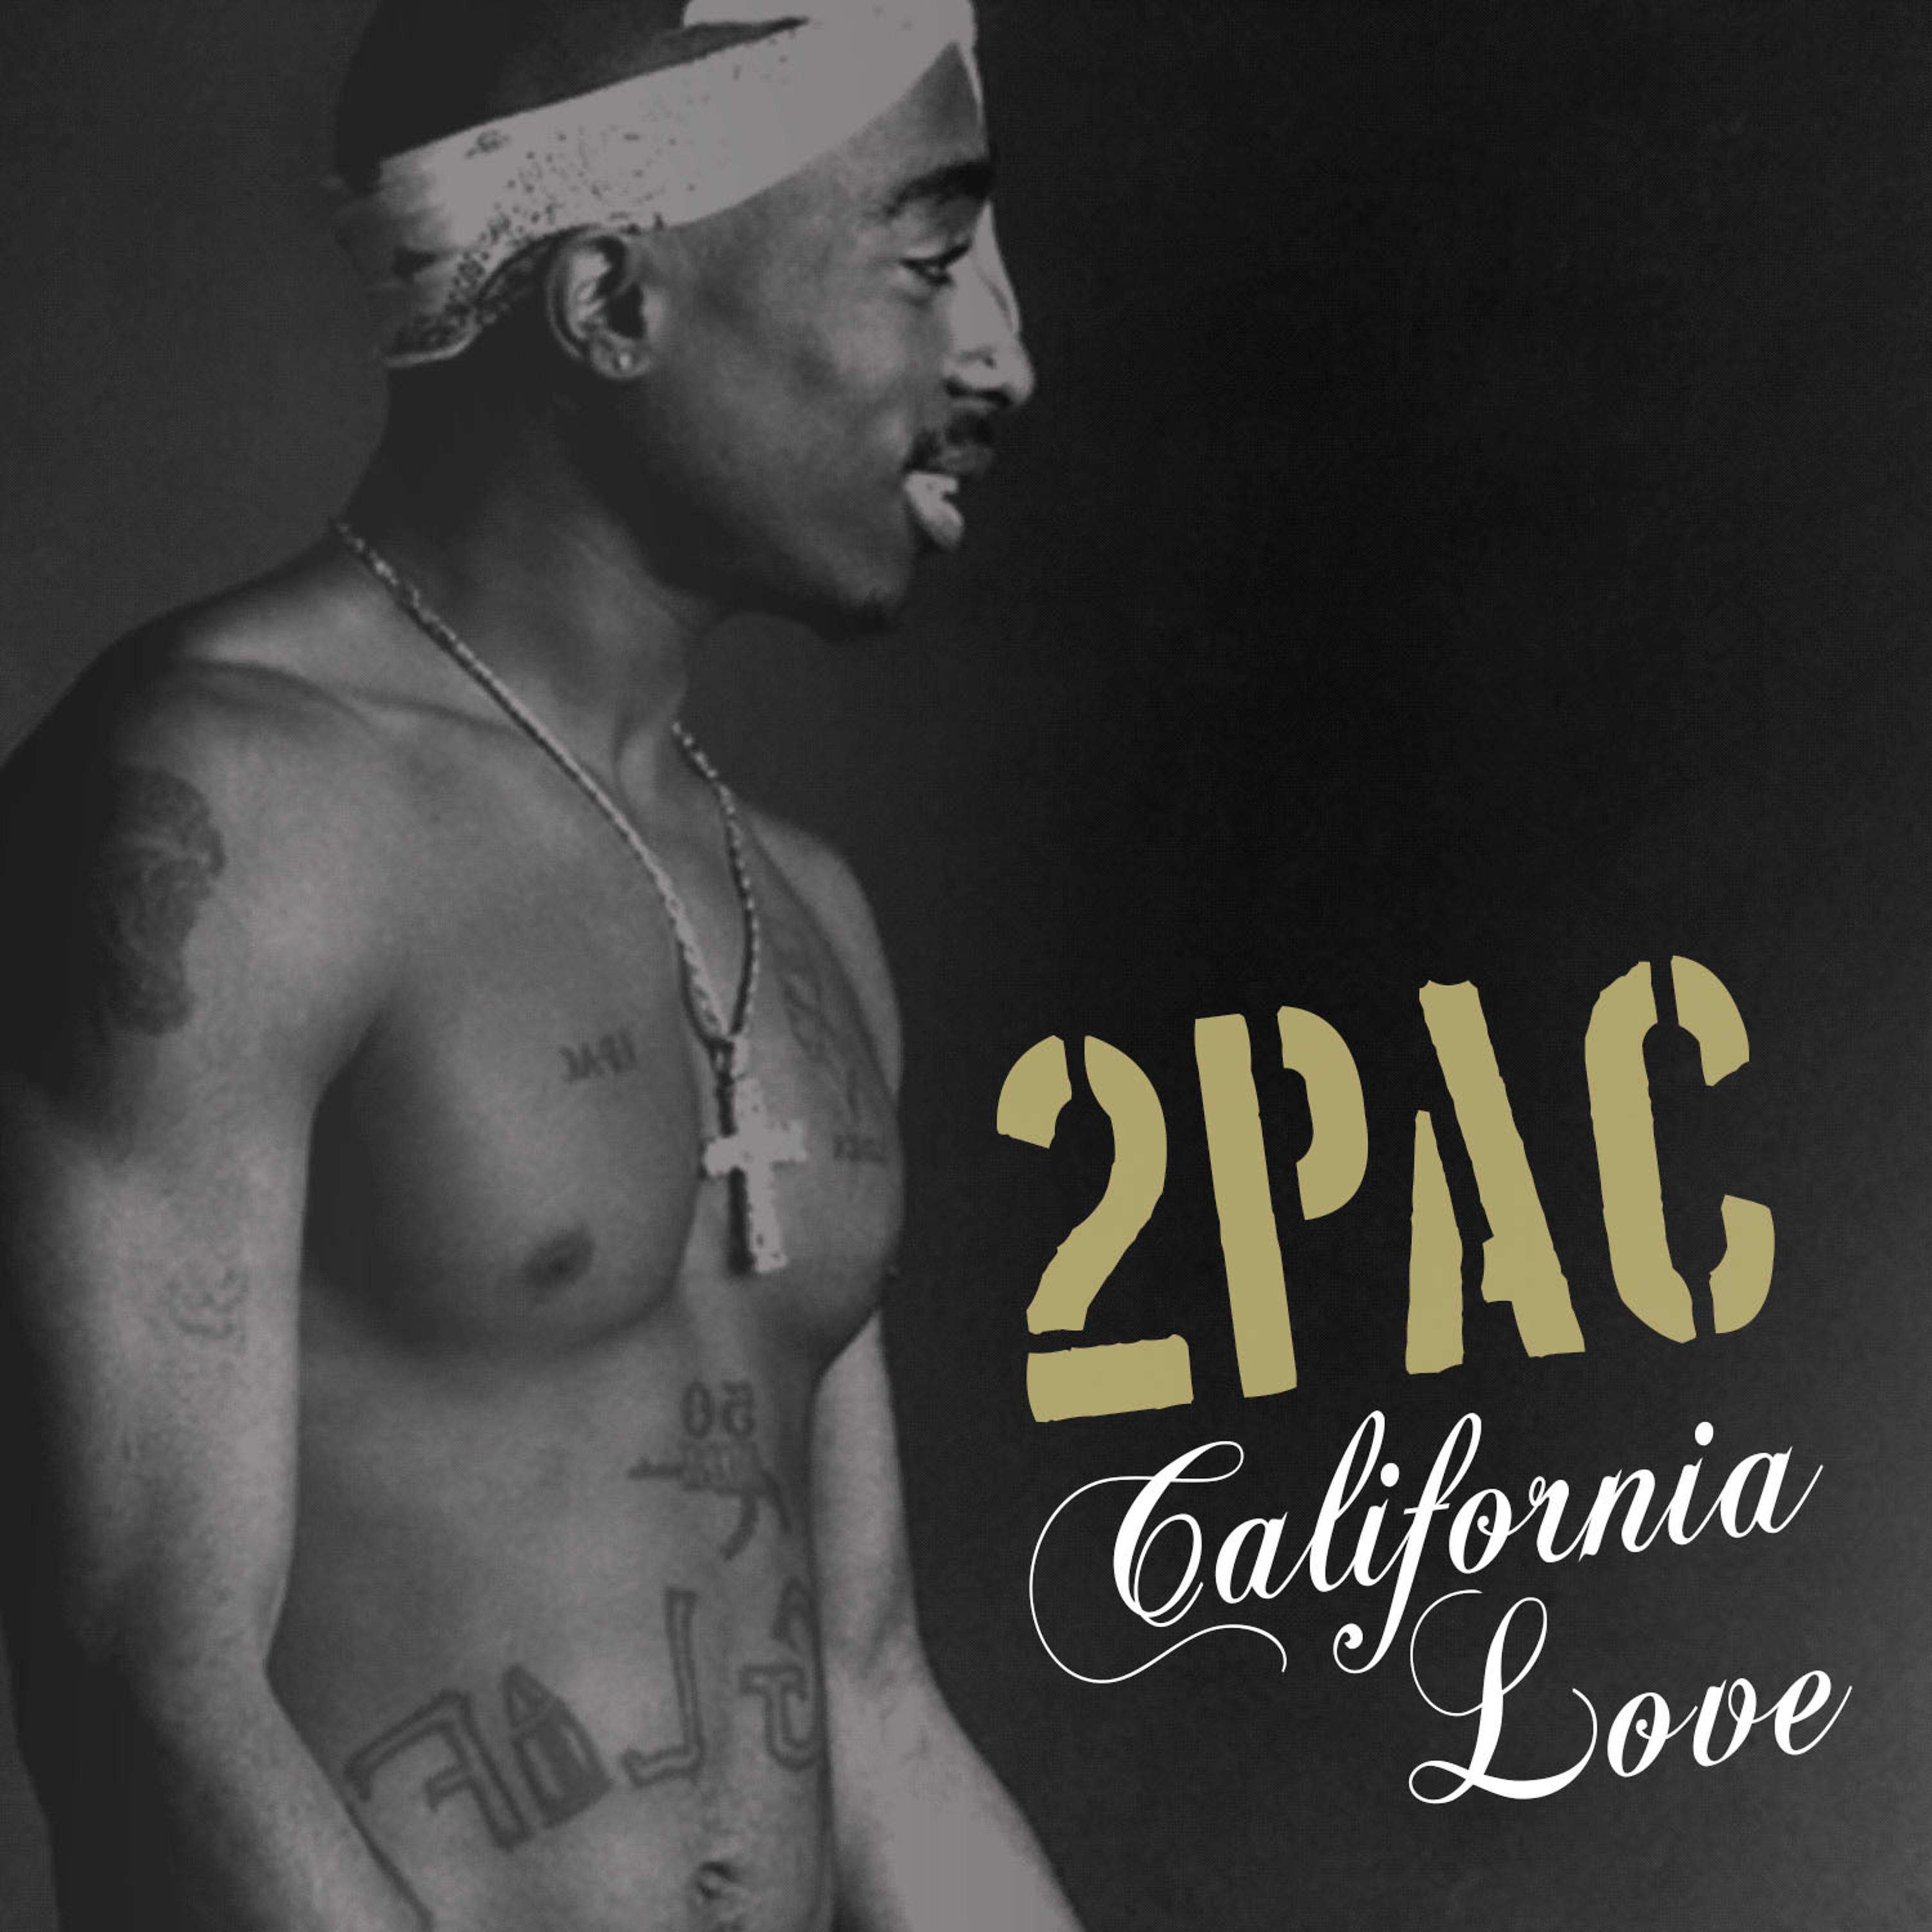 Ин май лайф песня. Тупак Шакур обложка. 2pac California Love обложка. 2пак музыкант. Тупак обложка альбома.